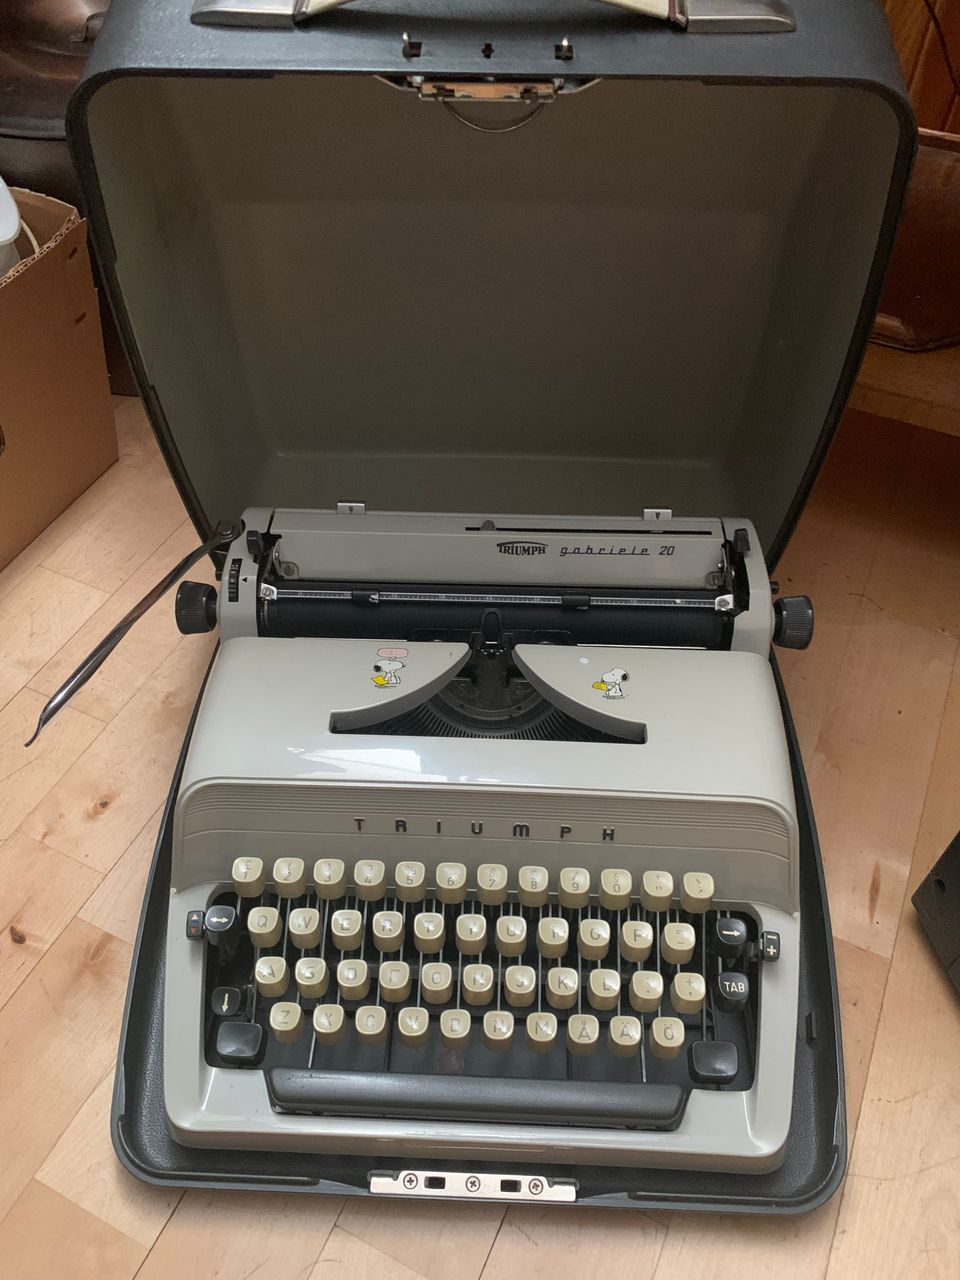 Triumph gabriele 20 kirjoituskone